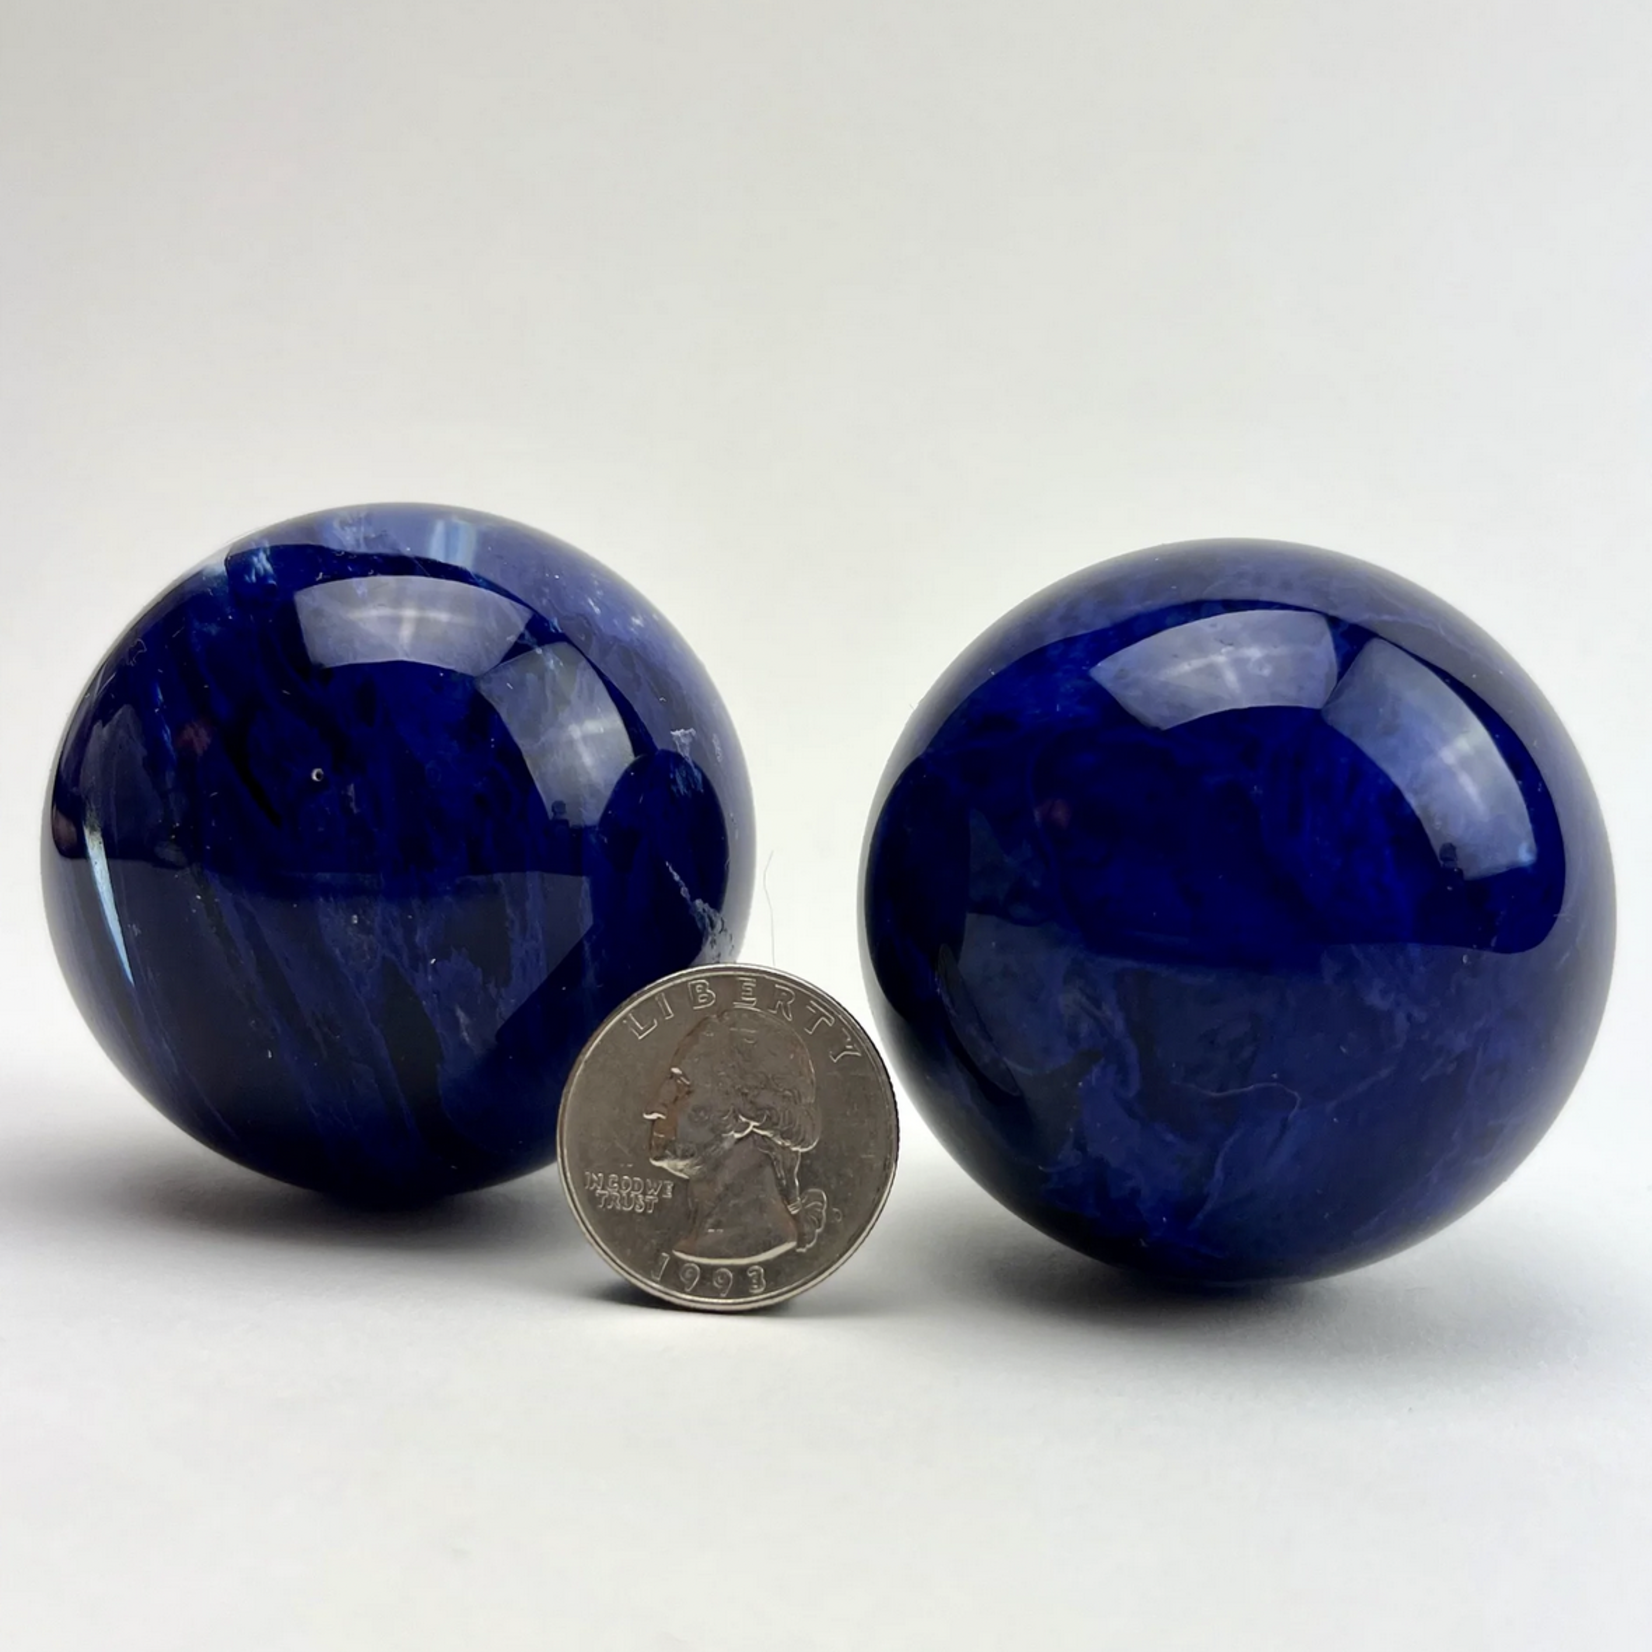 Blue Cherry Quartz Sphere | 50-60mm